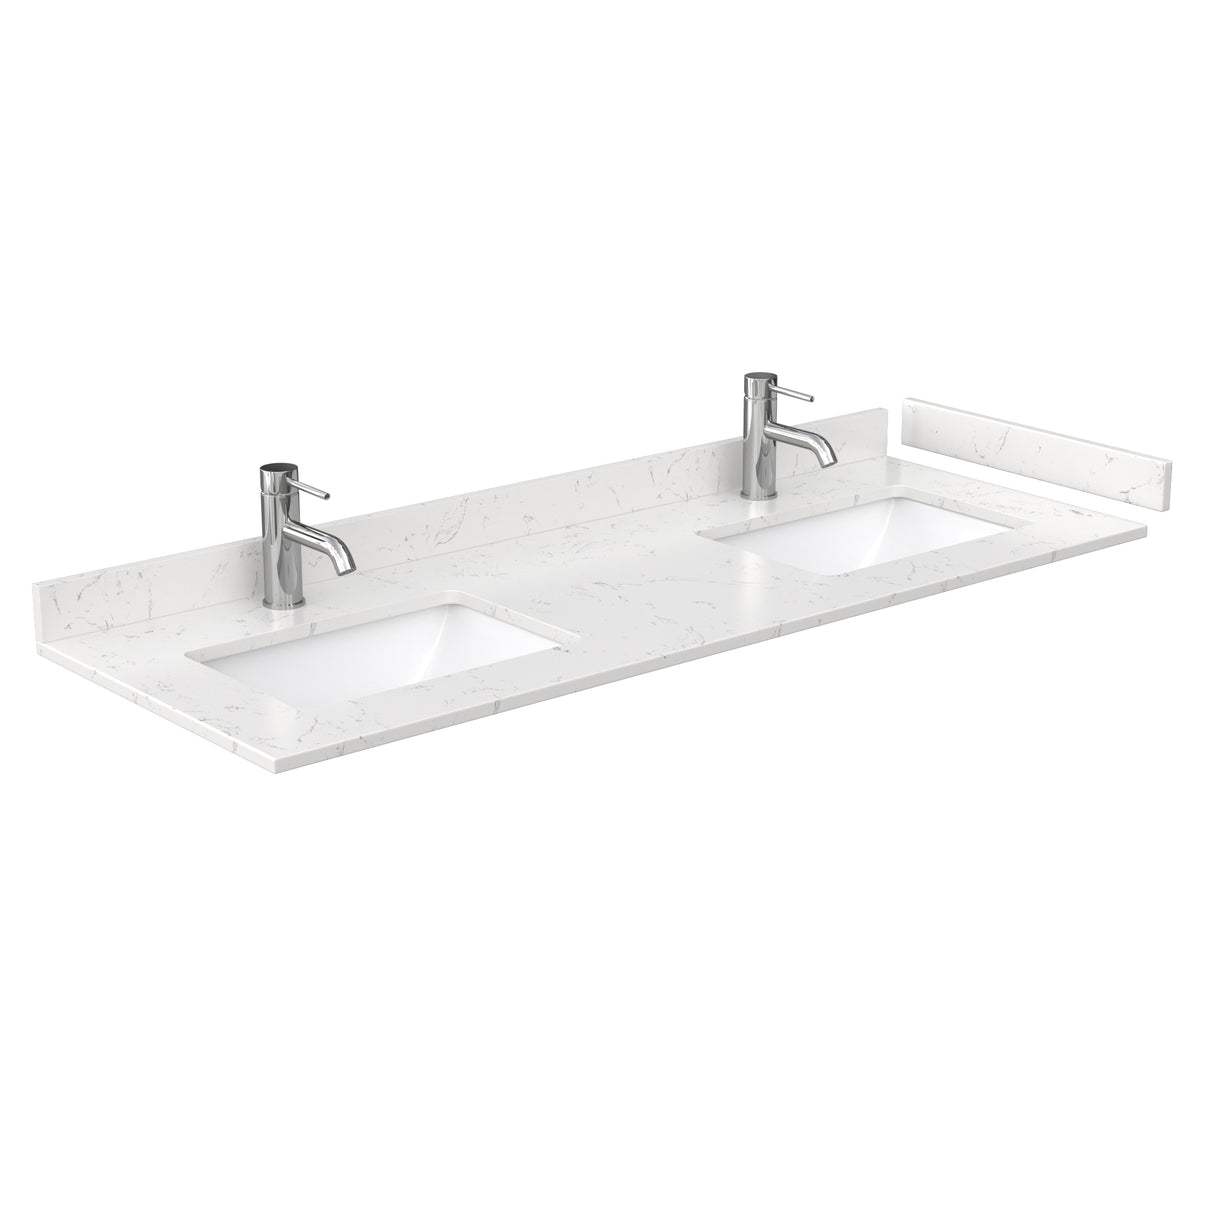 Daria 60 Inch Double Bathroom Vanity in White Carrara Cultured Marble Countertop Undermount Square Sinks 58 Inch Mirror